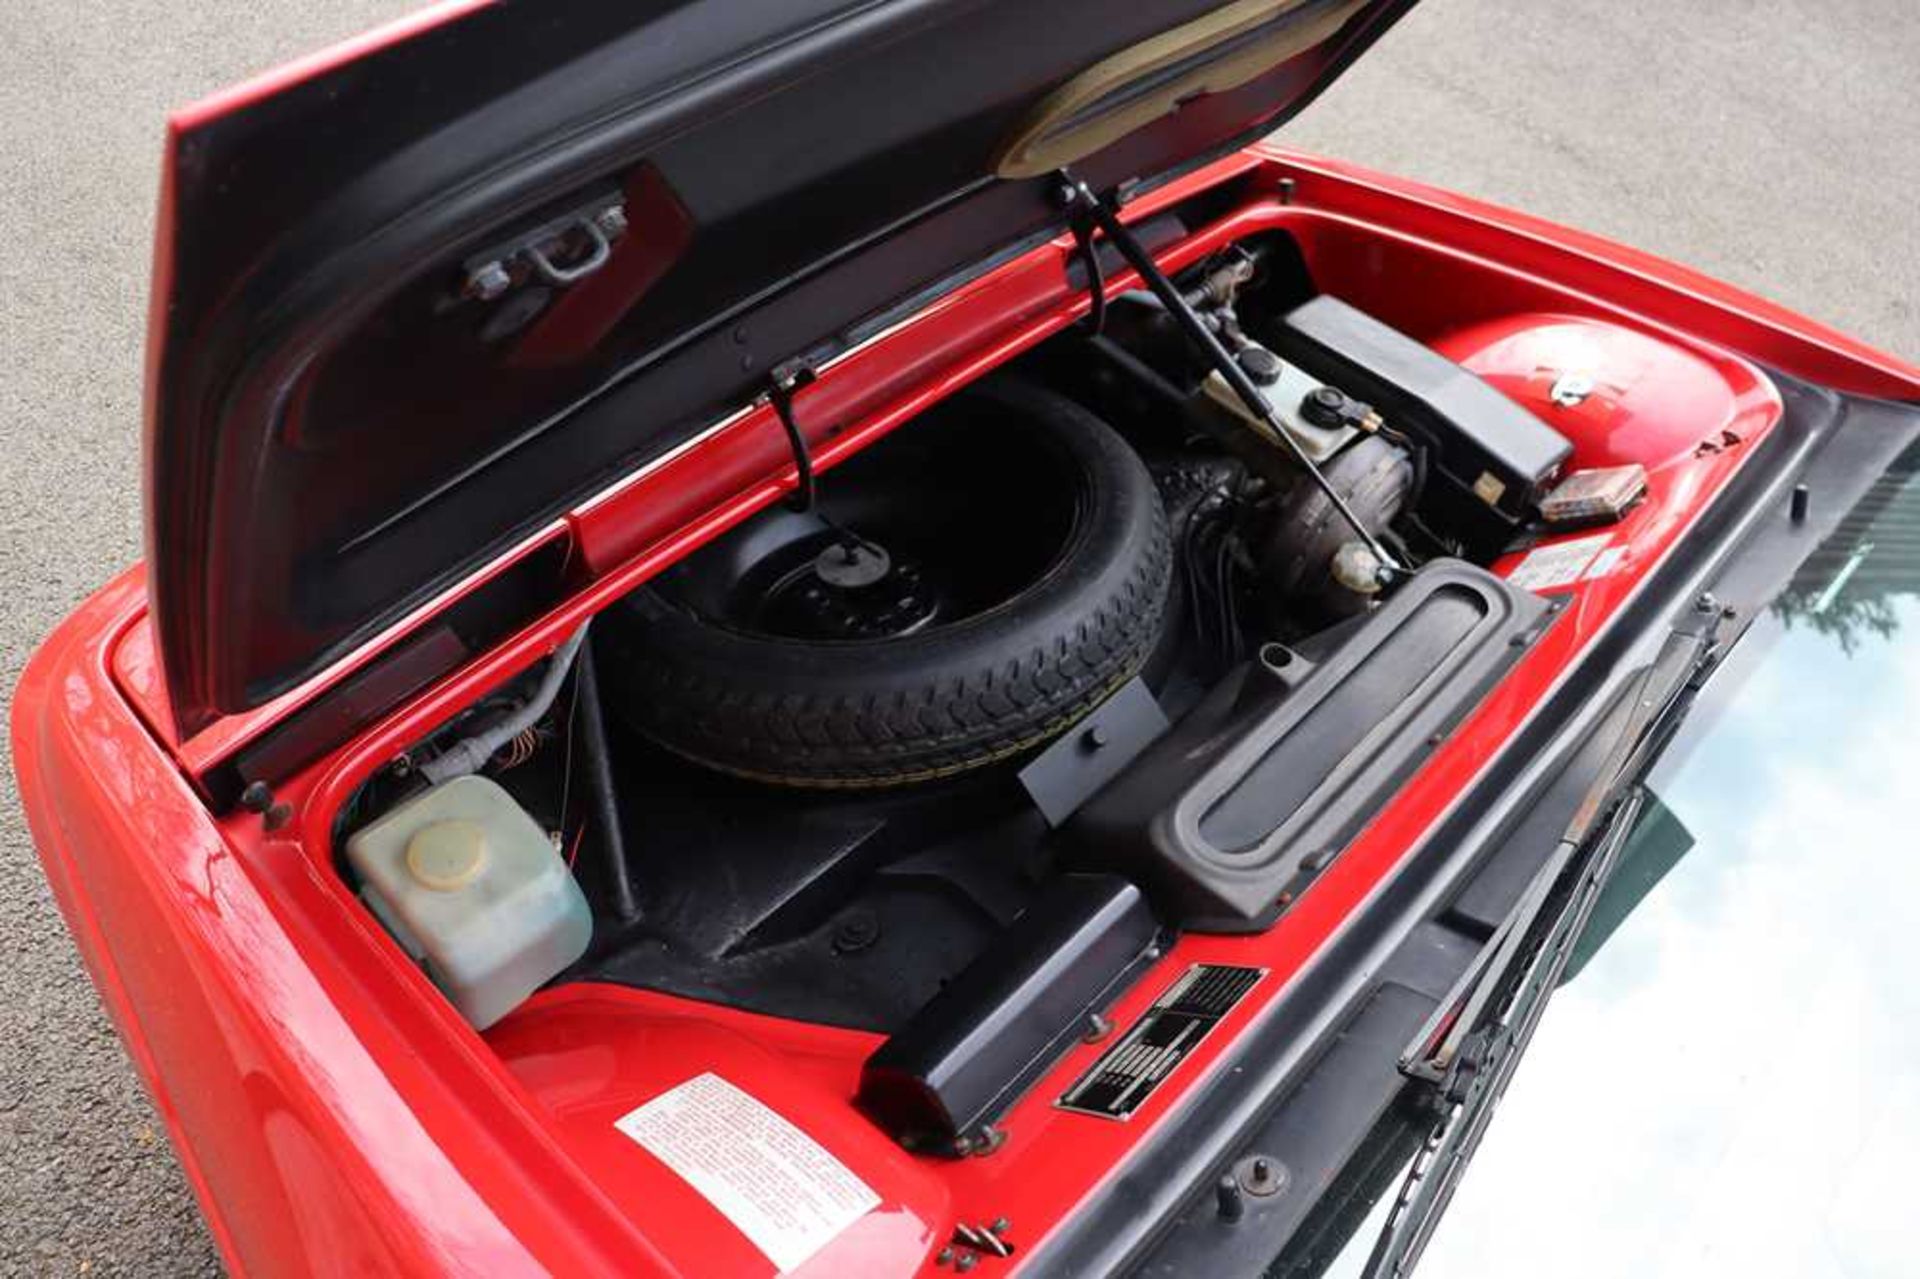 1989 Lotus Esprit Turbo Just 37,000 recorded miles - Image 66 of 72